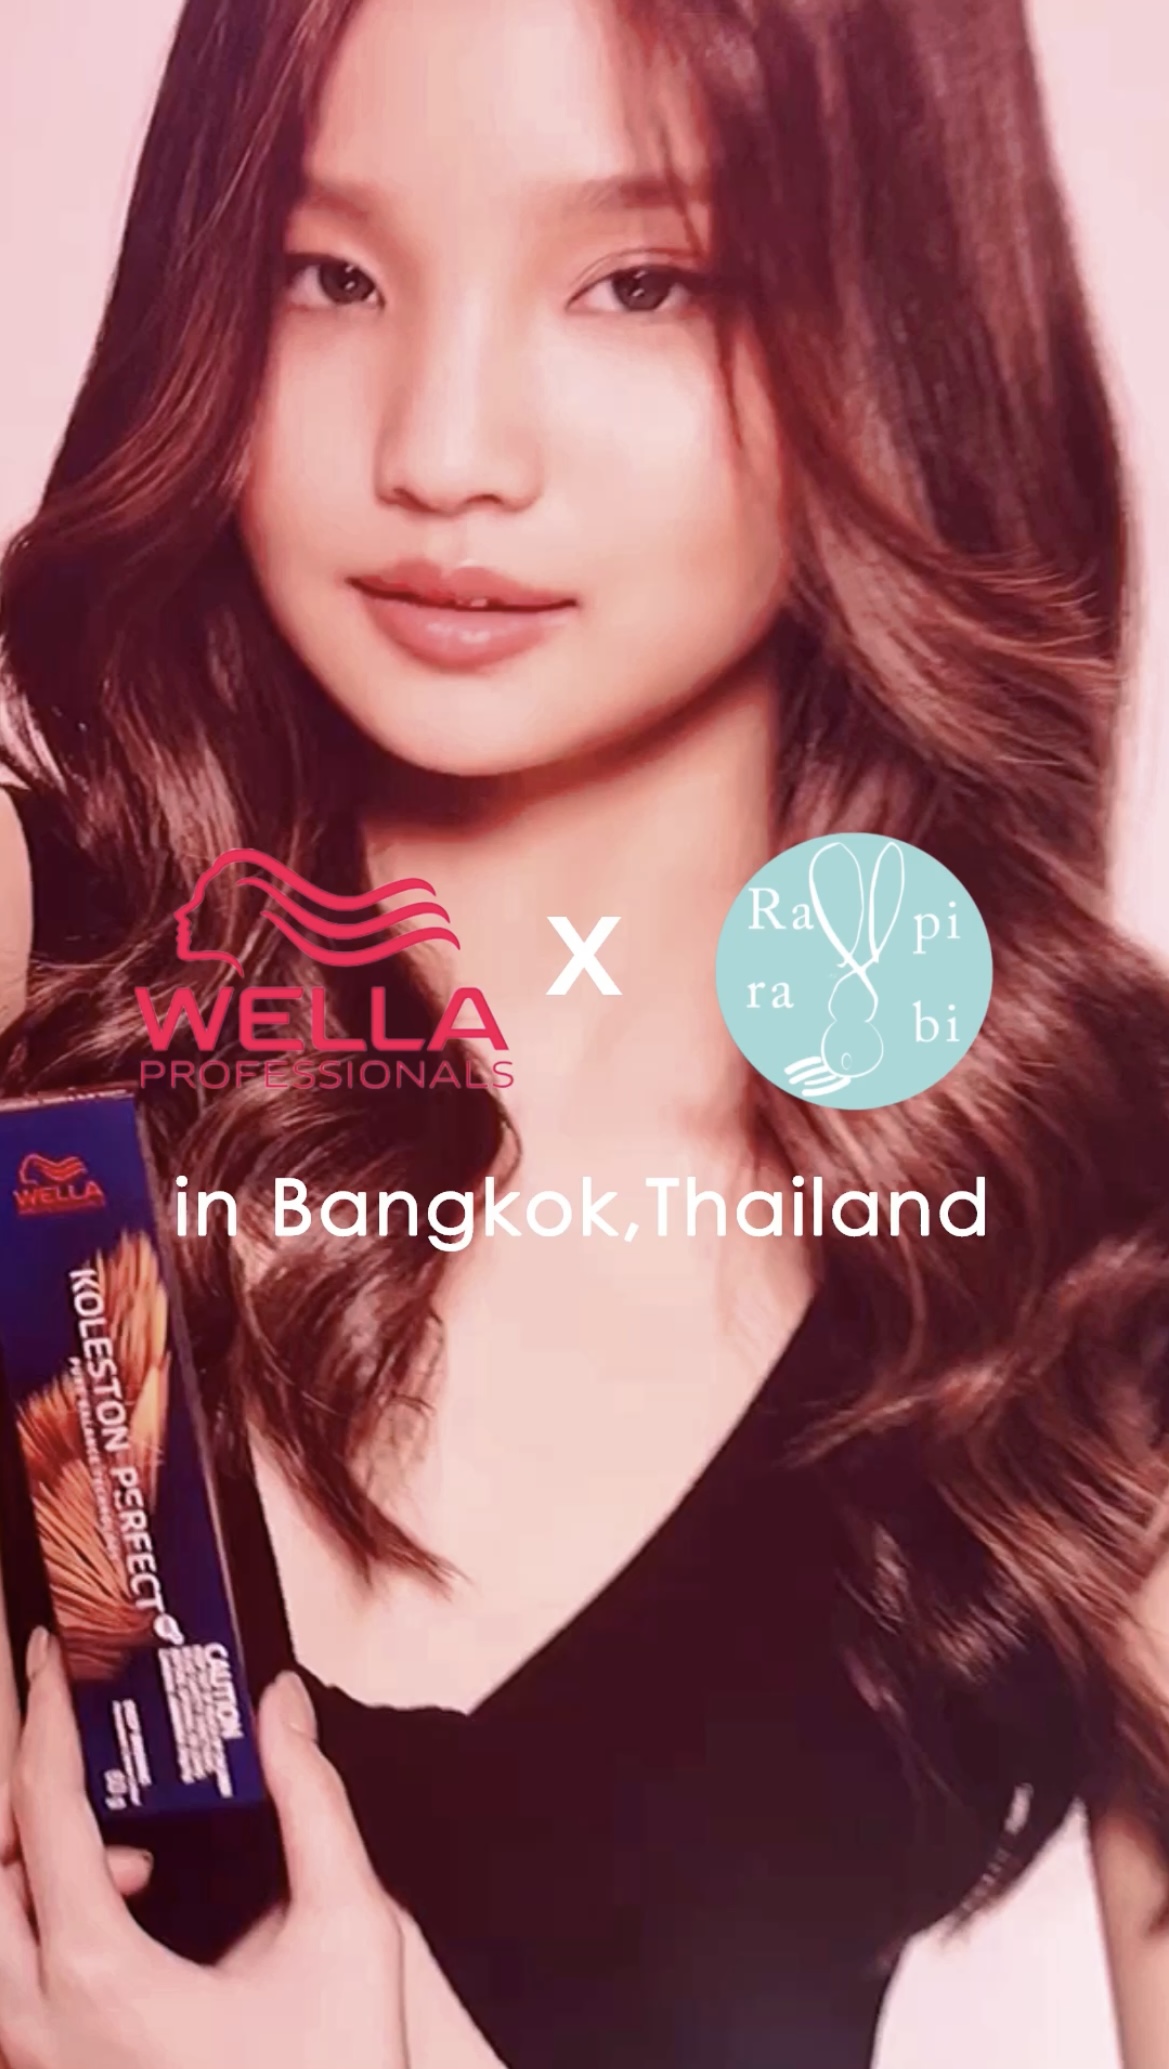 Wella x Rapi-rabi in Bangkok, Thailand 🇹🇭 By Rapi-rabi